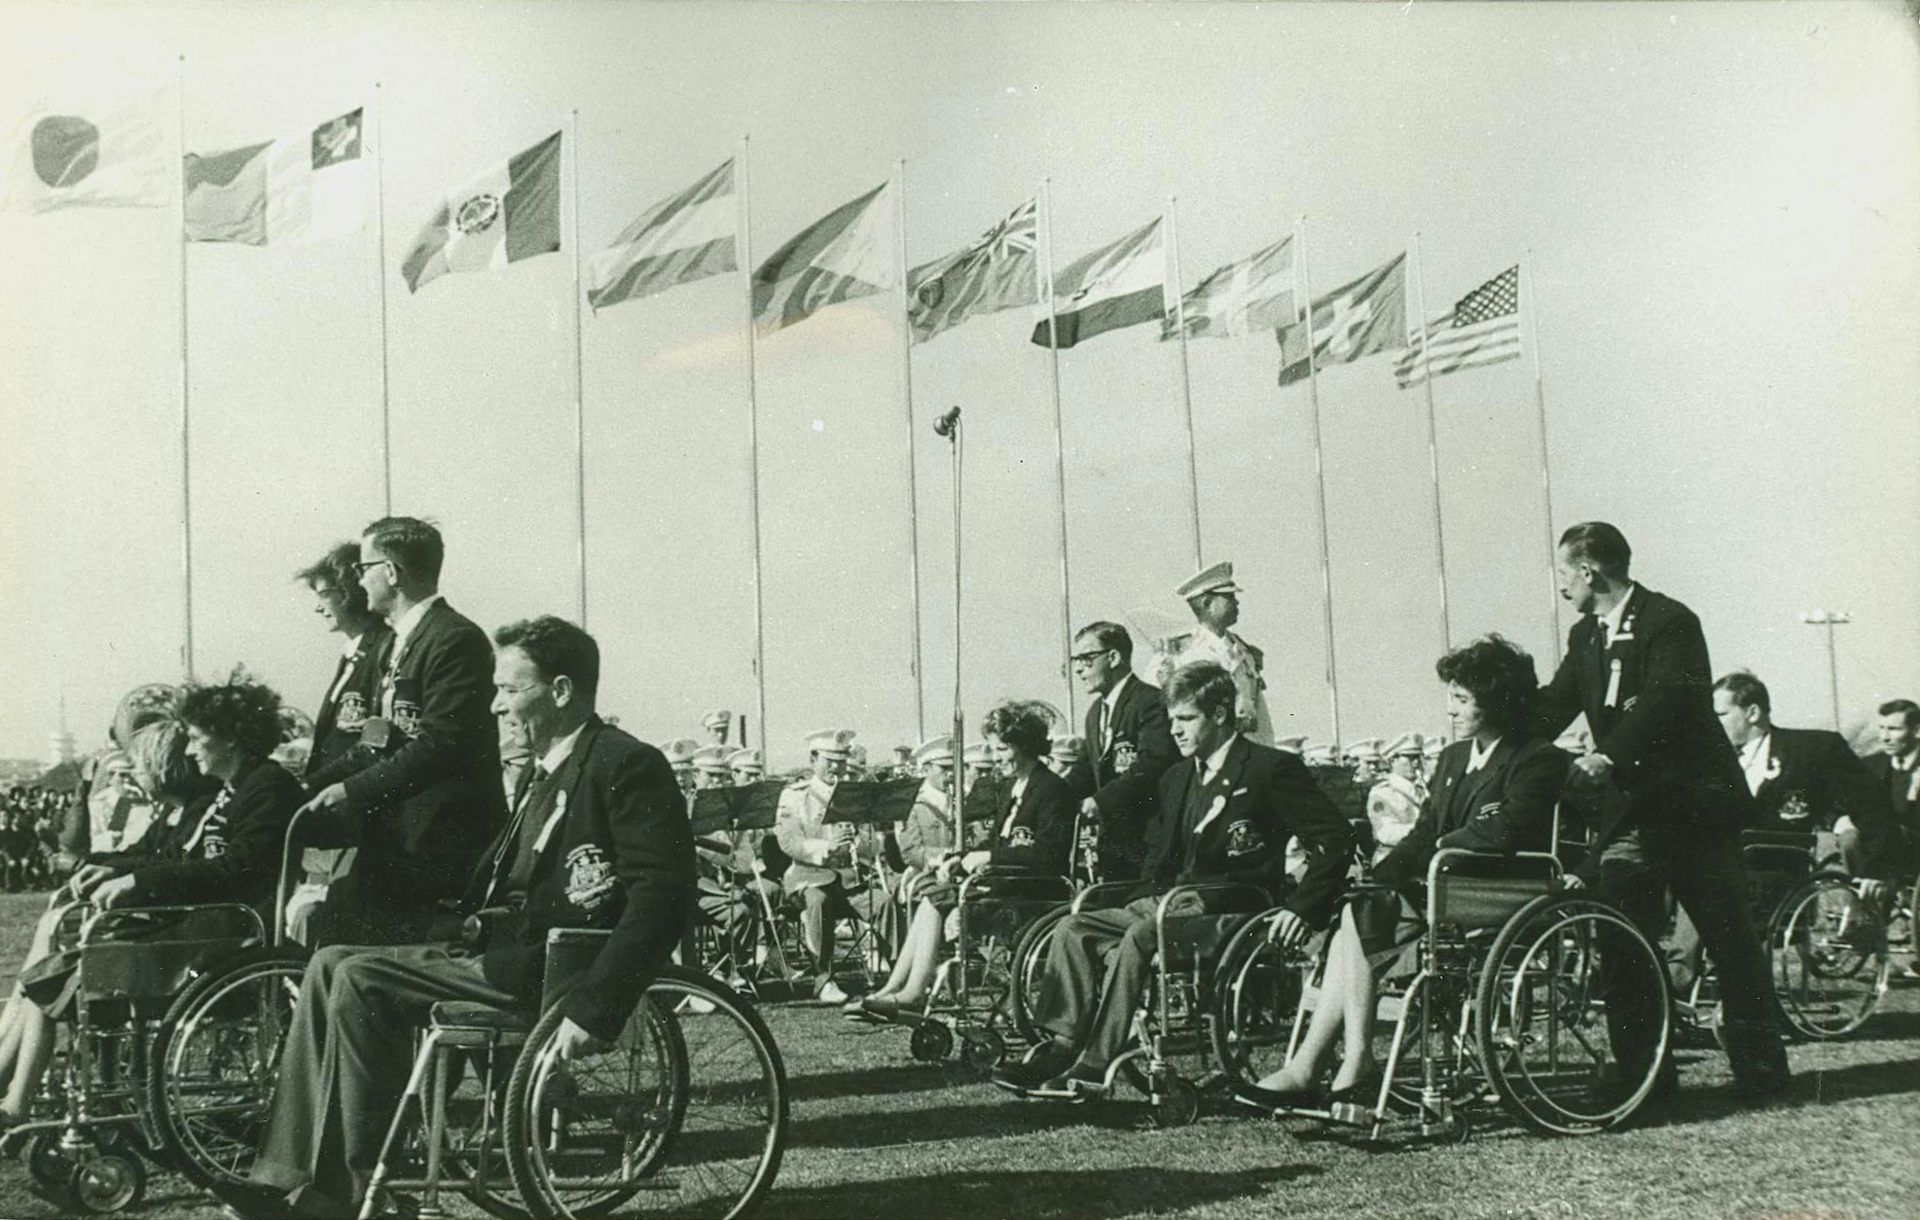 Paralympics: The origin story